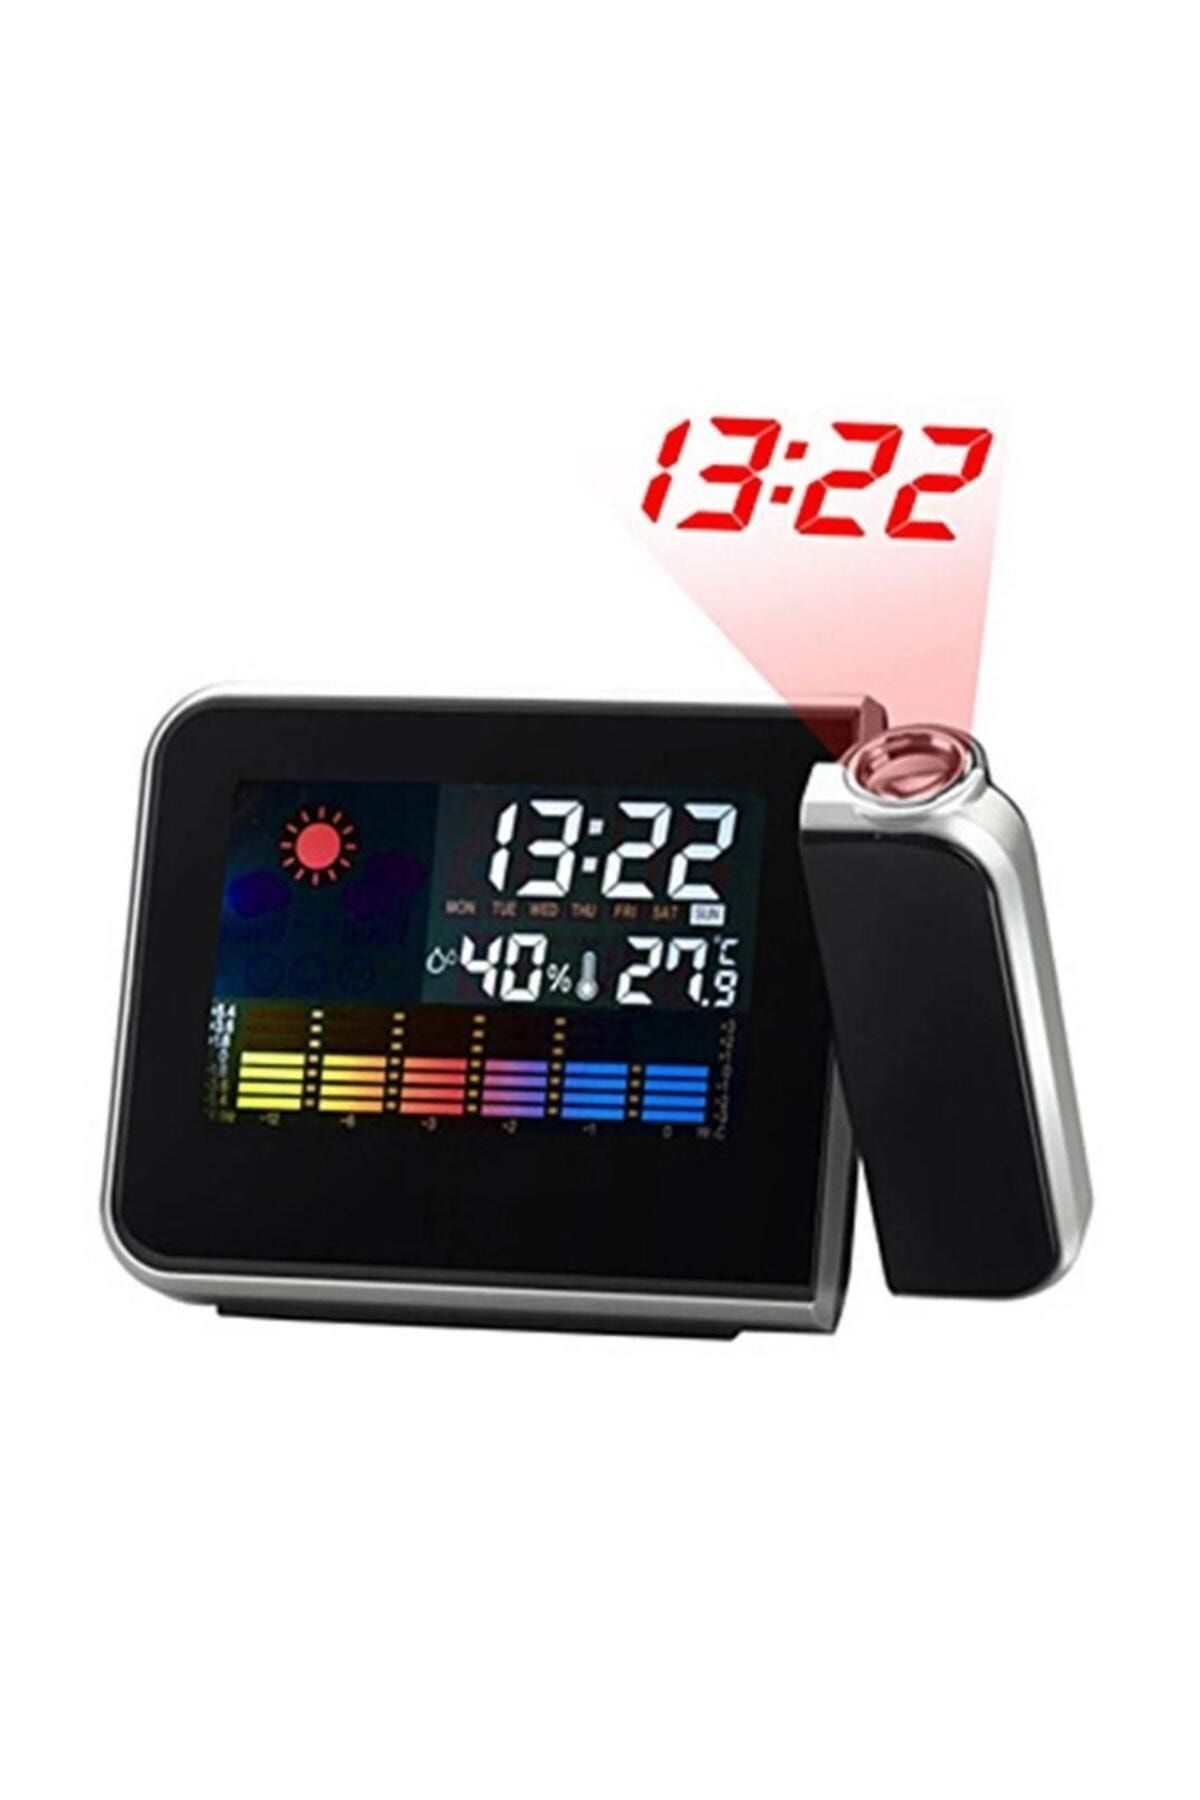 SGE TEKNOLOJİ Projektörlü Masa Saati Termometre Takvim Alarm Lcd Ekranlı Çalar Saat